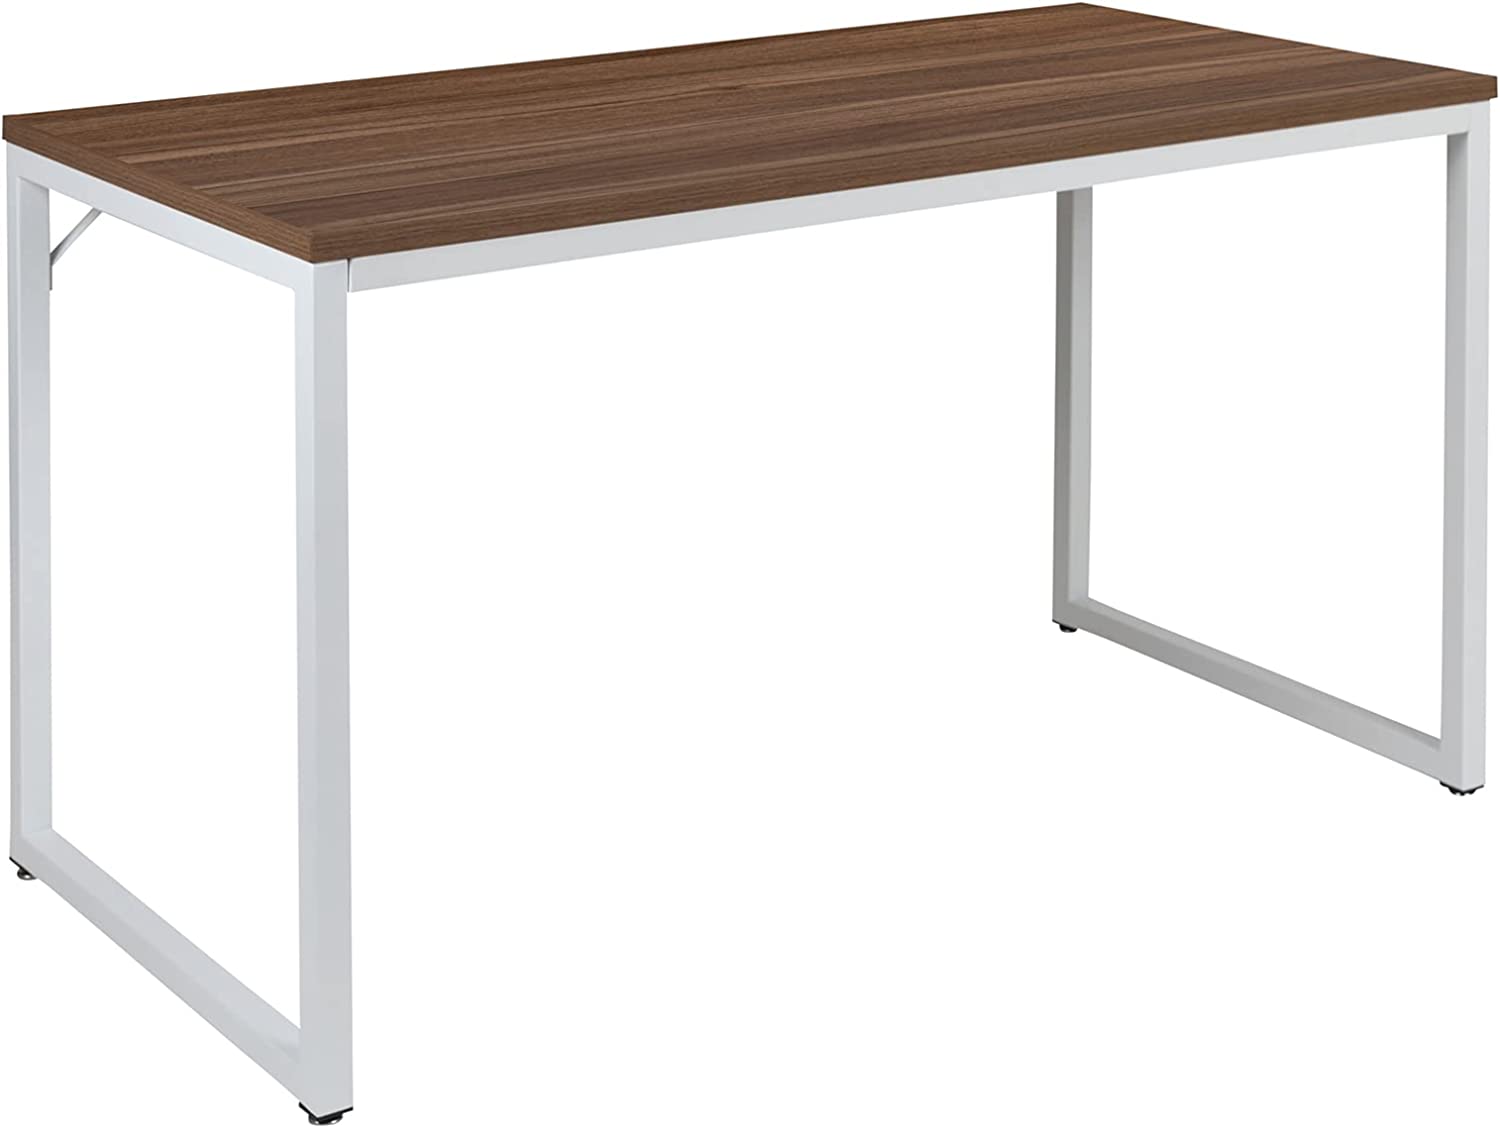 Tiverton Industrial Modern Desk - Commercial Grade Office Computer Desk and Home Office Desk - 47Inch Long (Walnut/White)